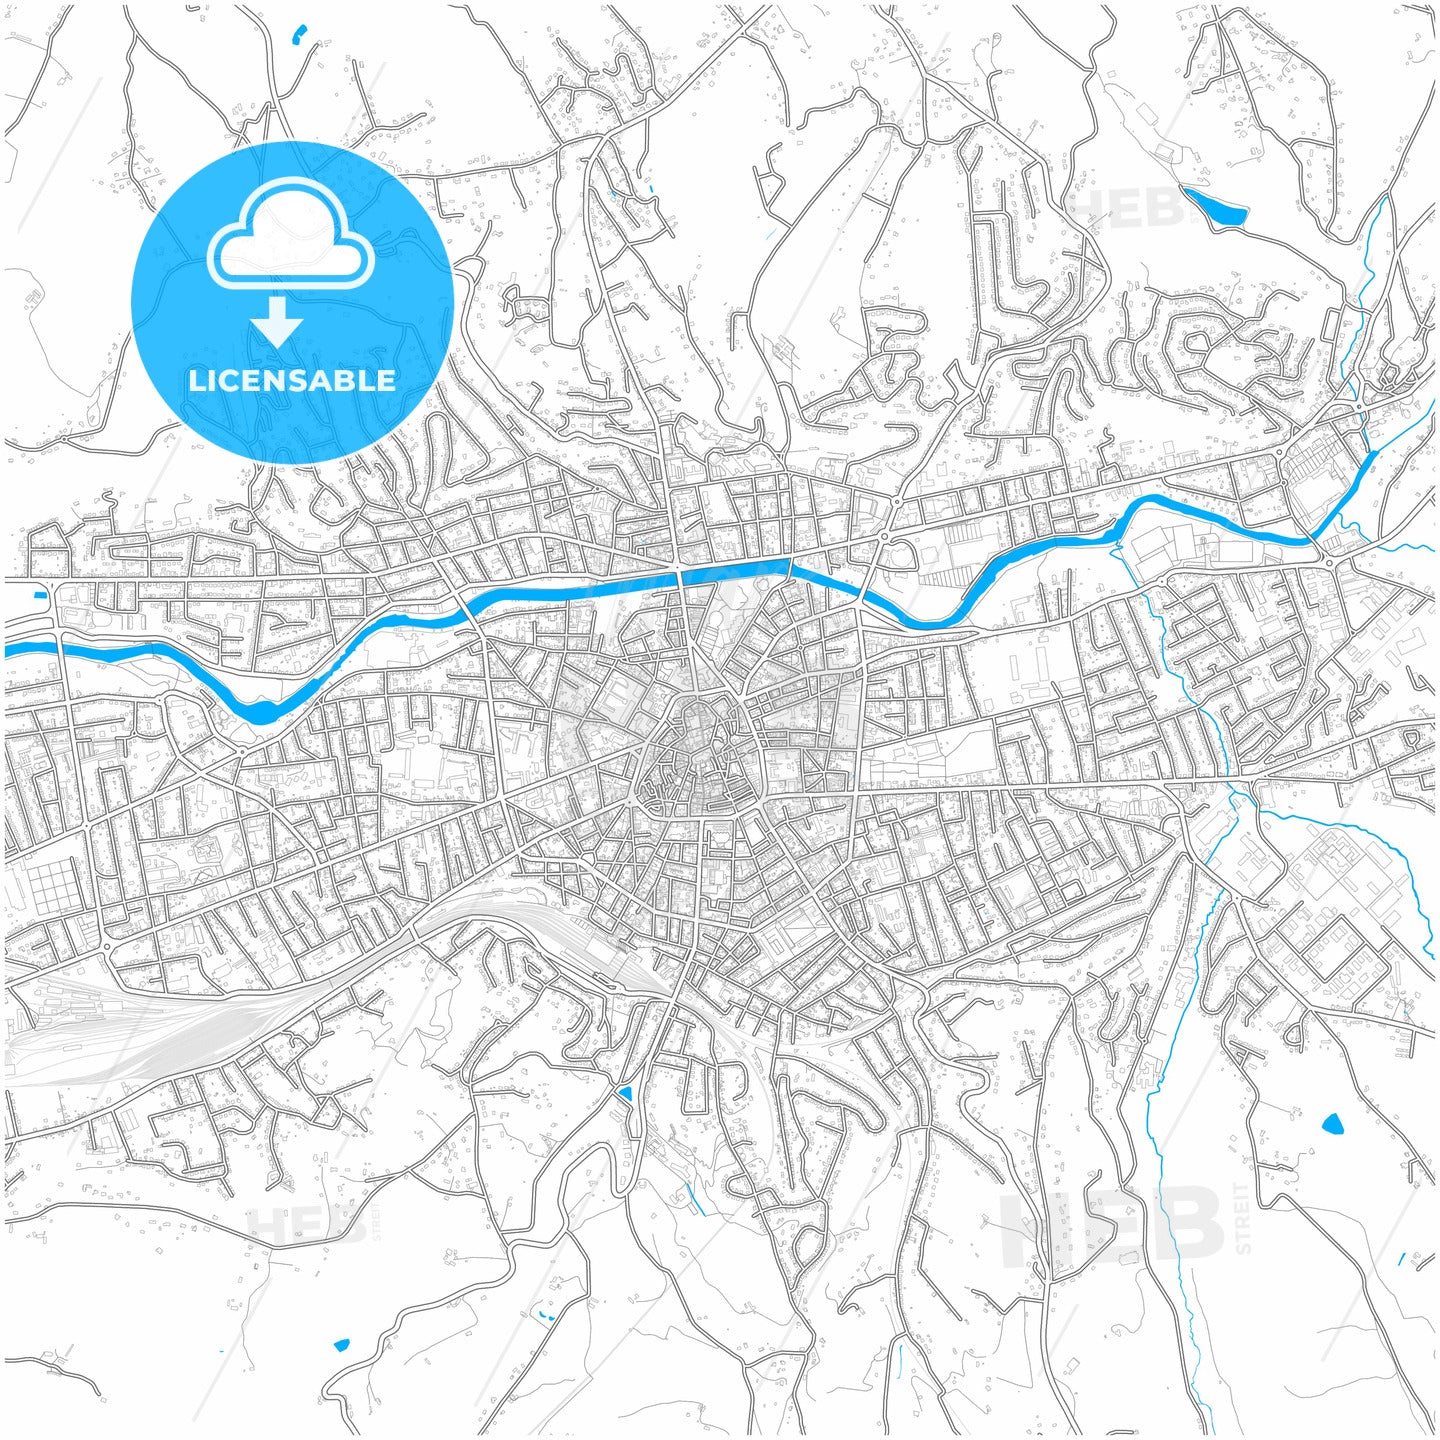 Brive-la-Gaillarde, Corrèze, France, city map with high quality roads.